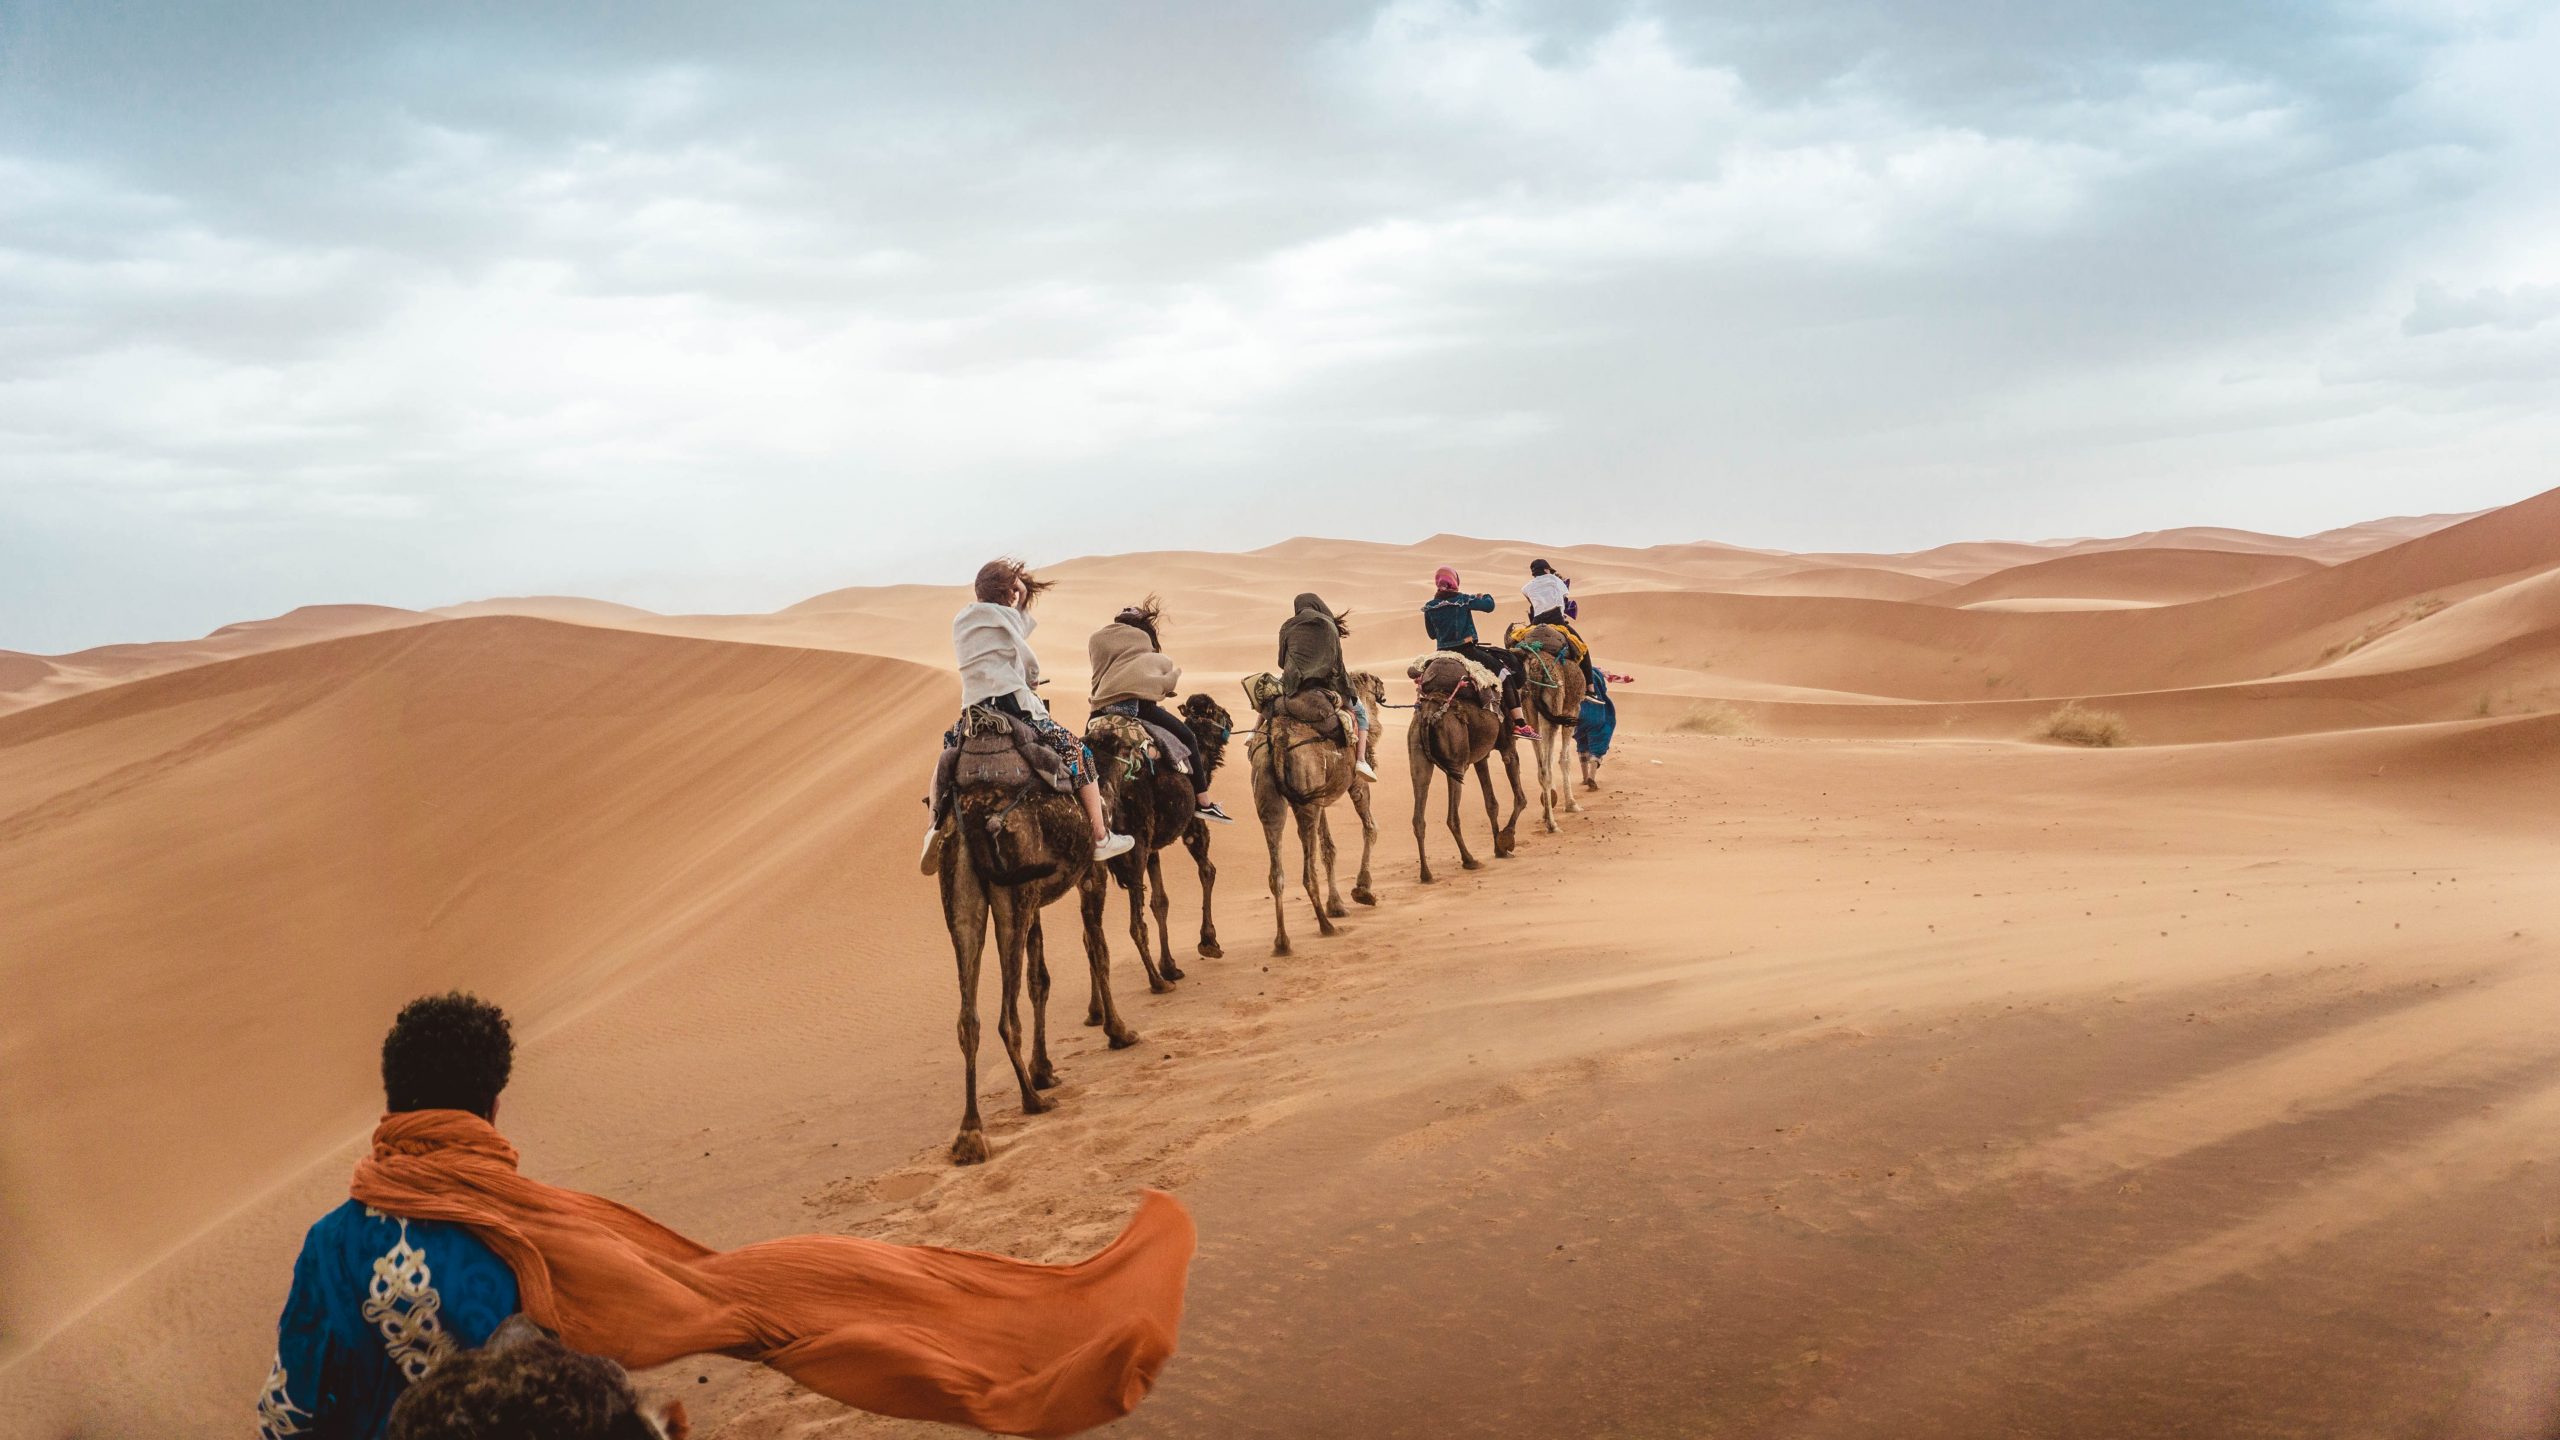 Sahara Desert in Morocco - Our impressive tour